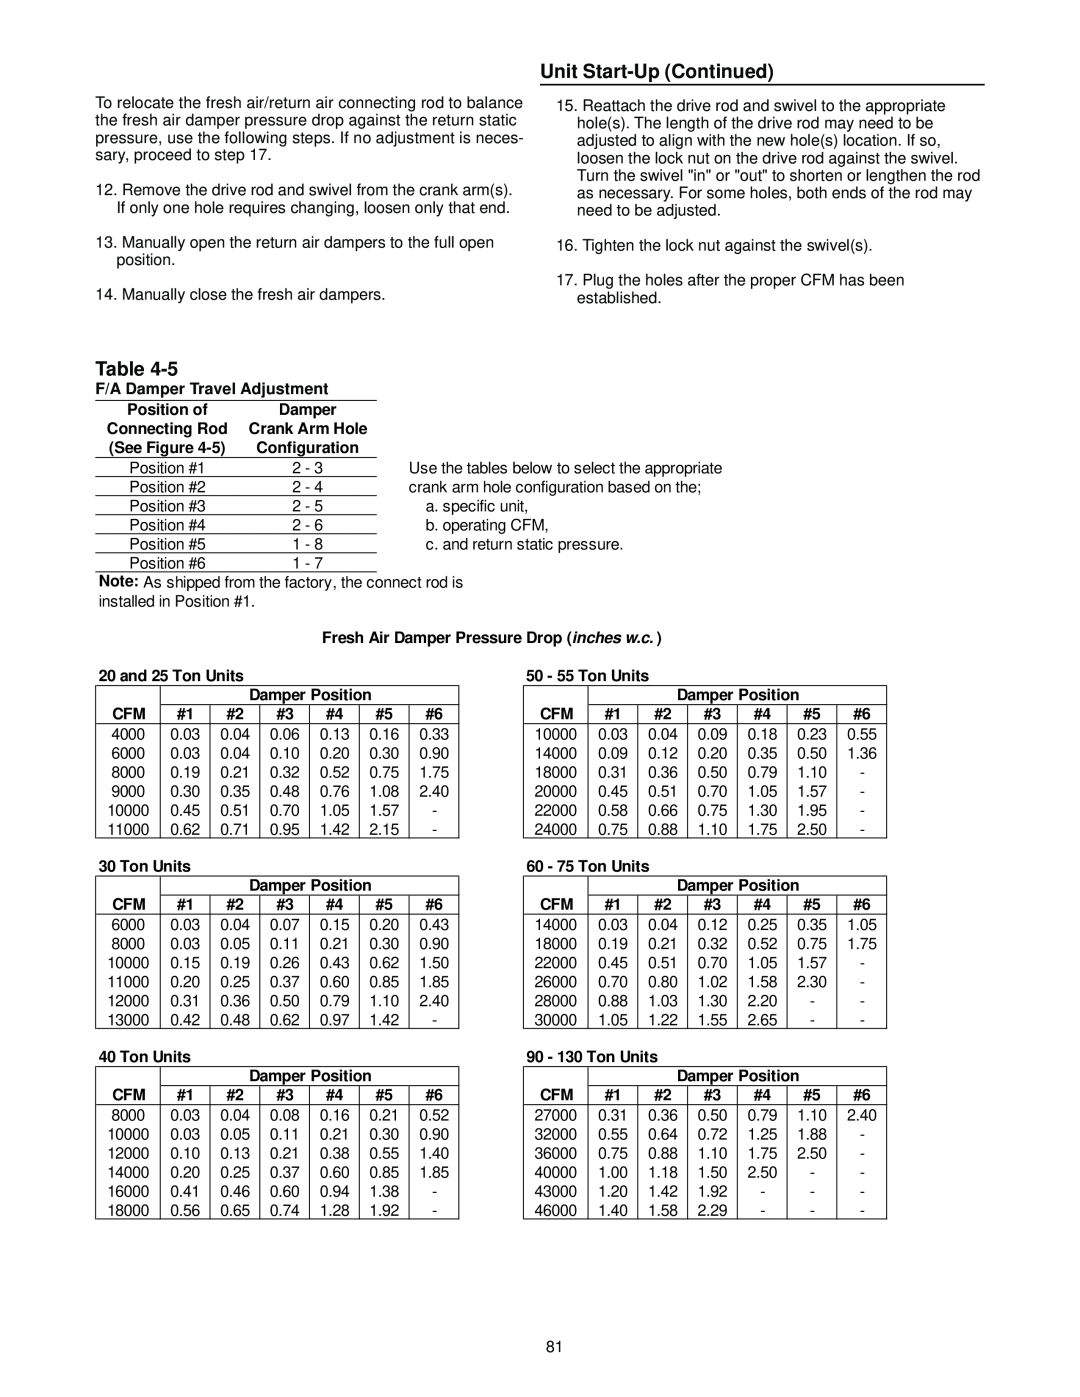 Trane RT-SVX10C-EN specifications Unit Start-UpContinued, Table, F/A Damper Travel Adjustment 